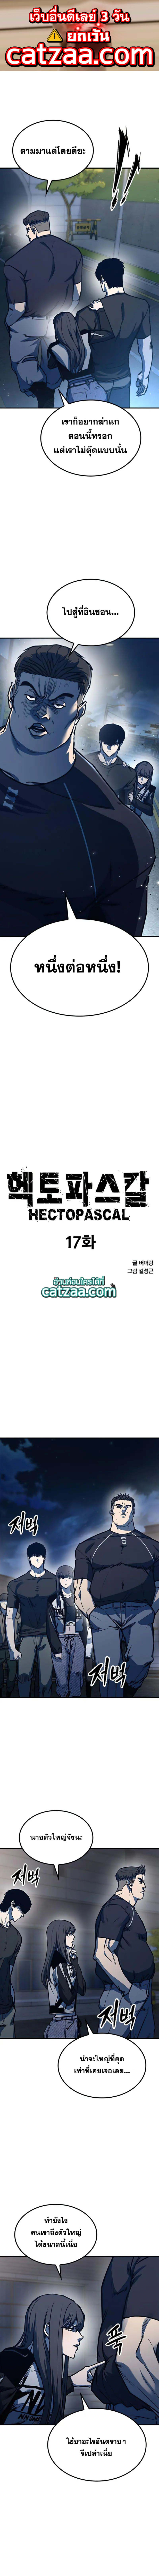 Hectopascals 17 (1)